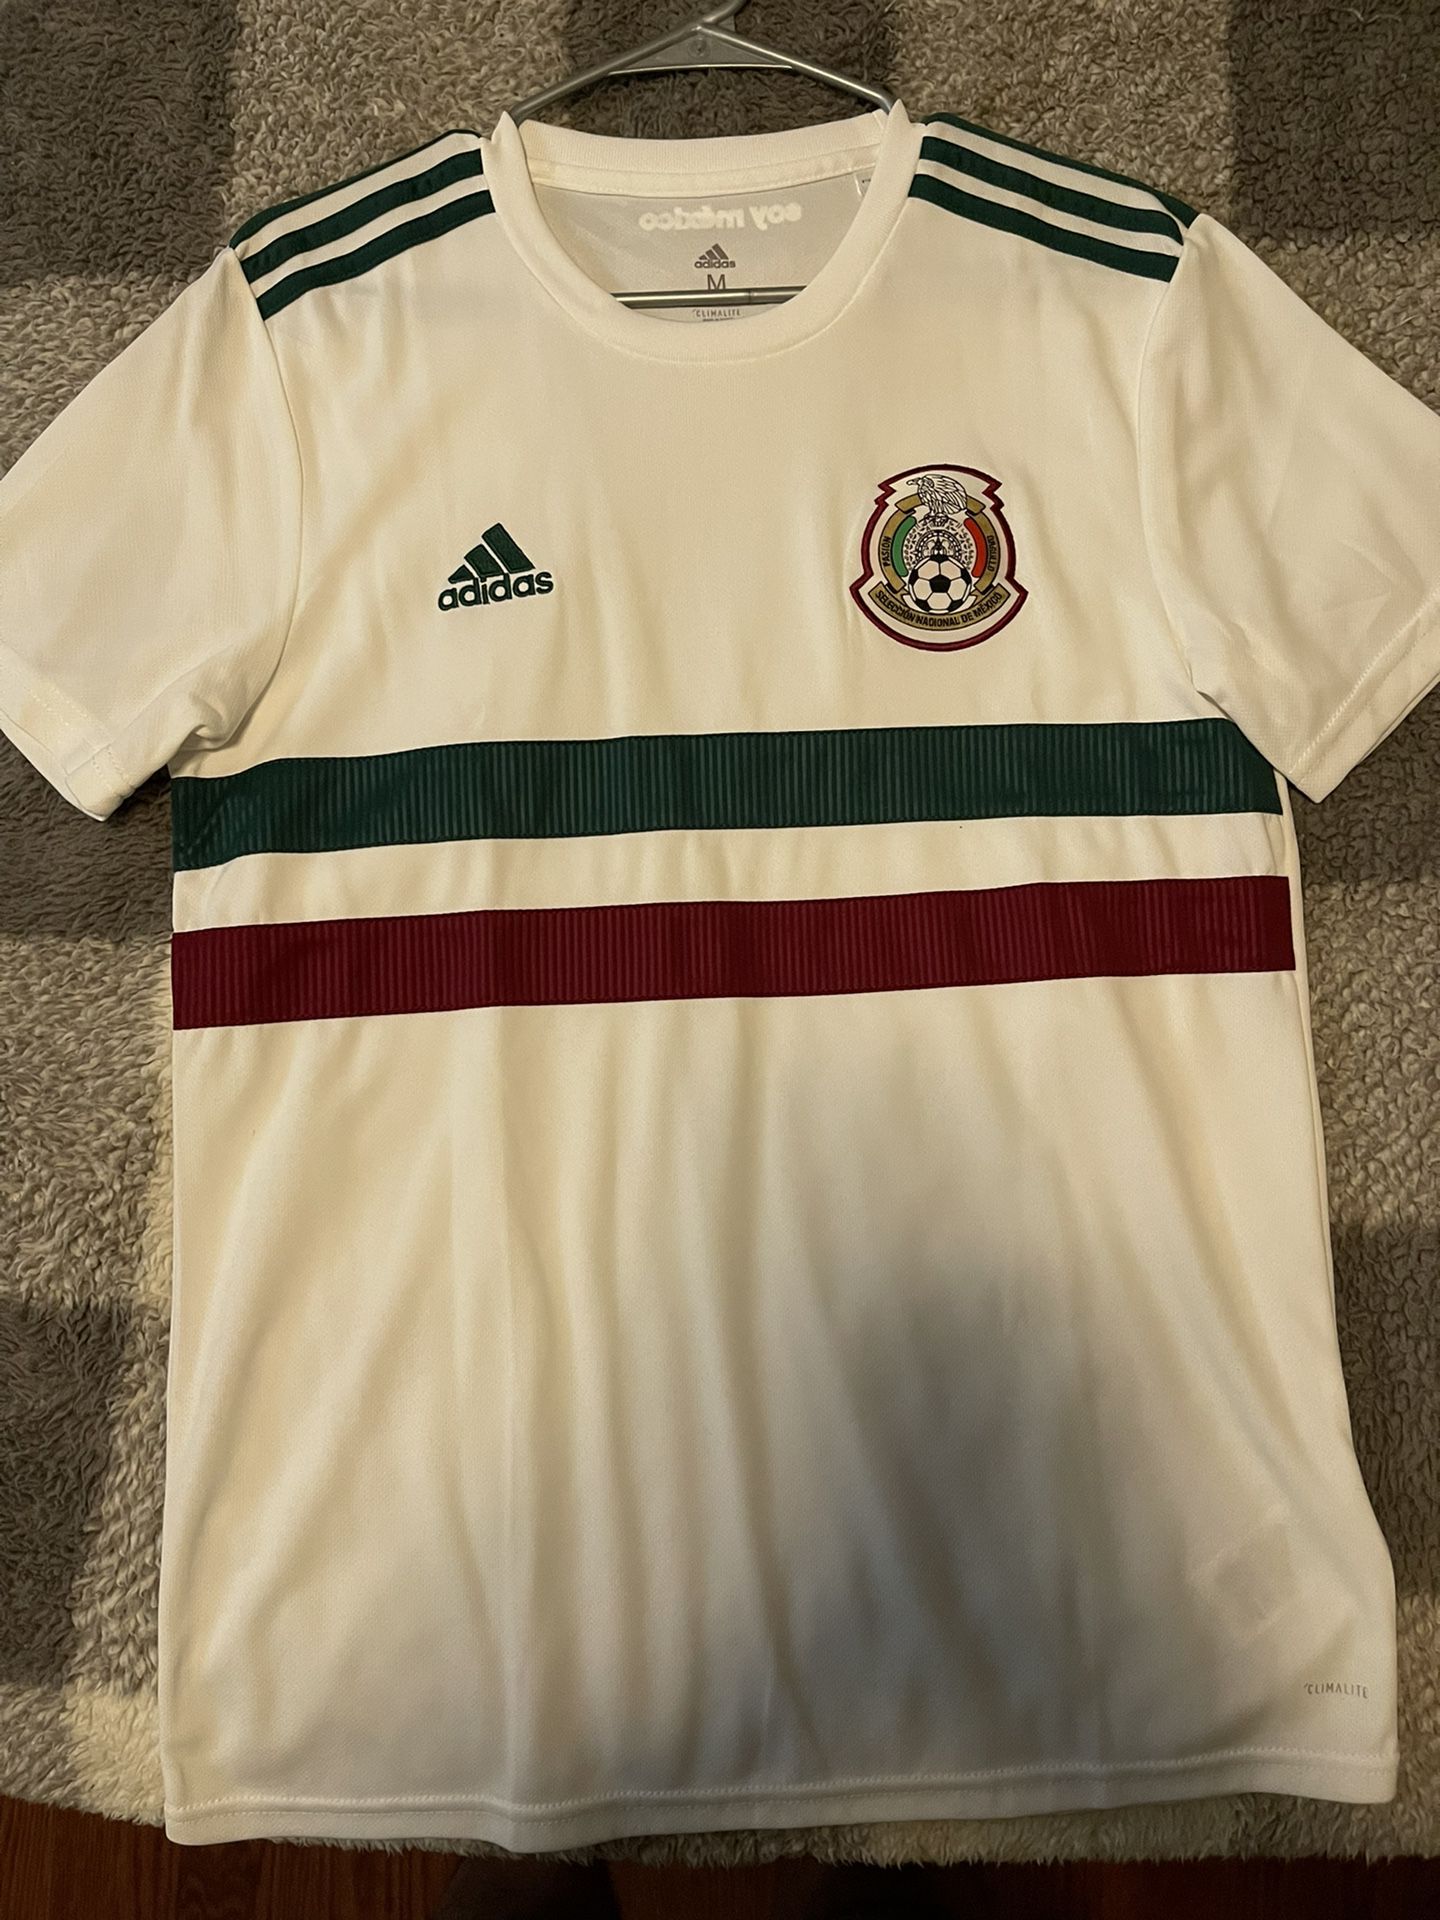 4 Soccer Jerseys (Mexico And Chivas)